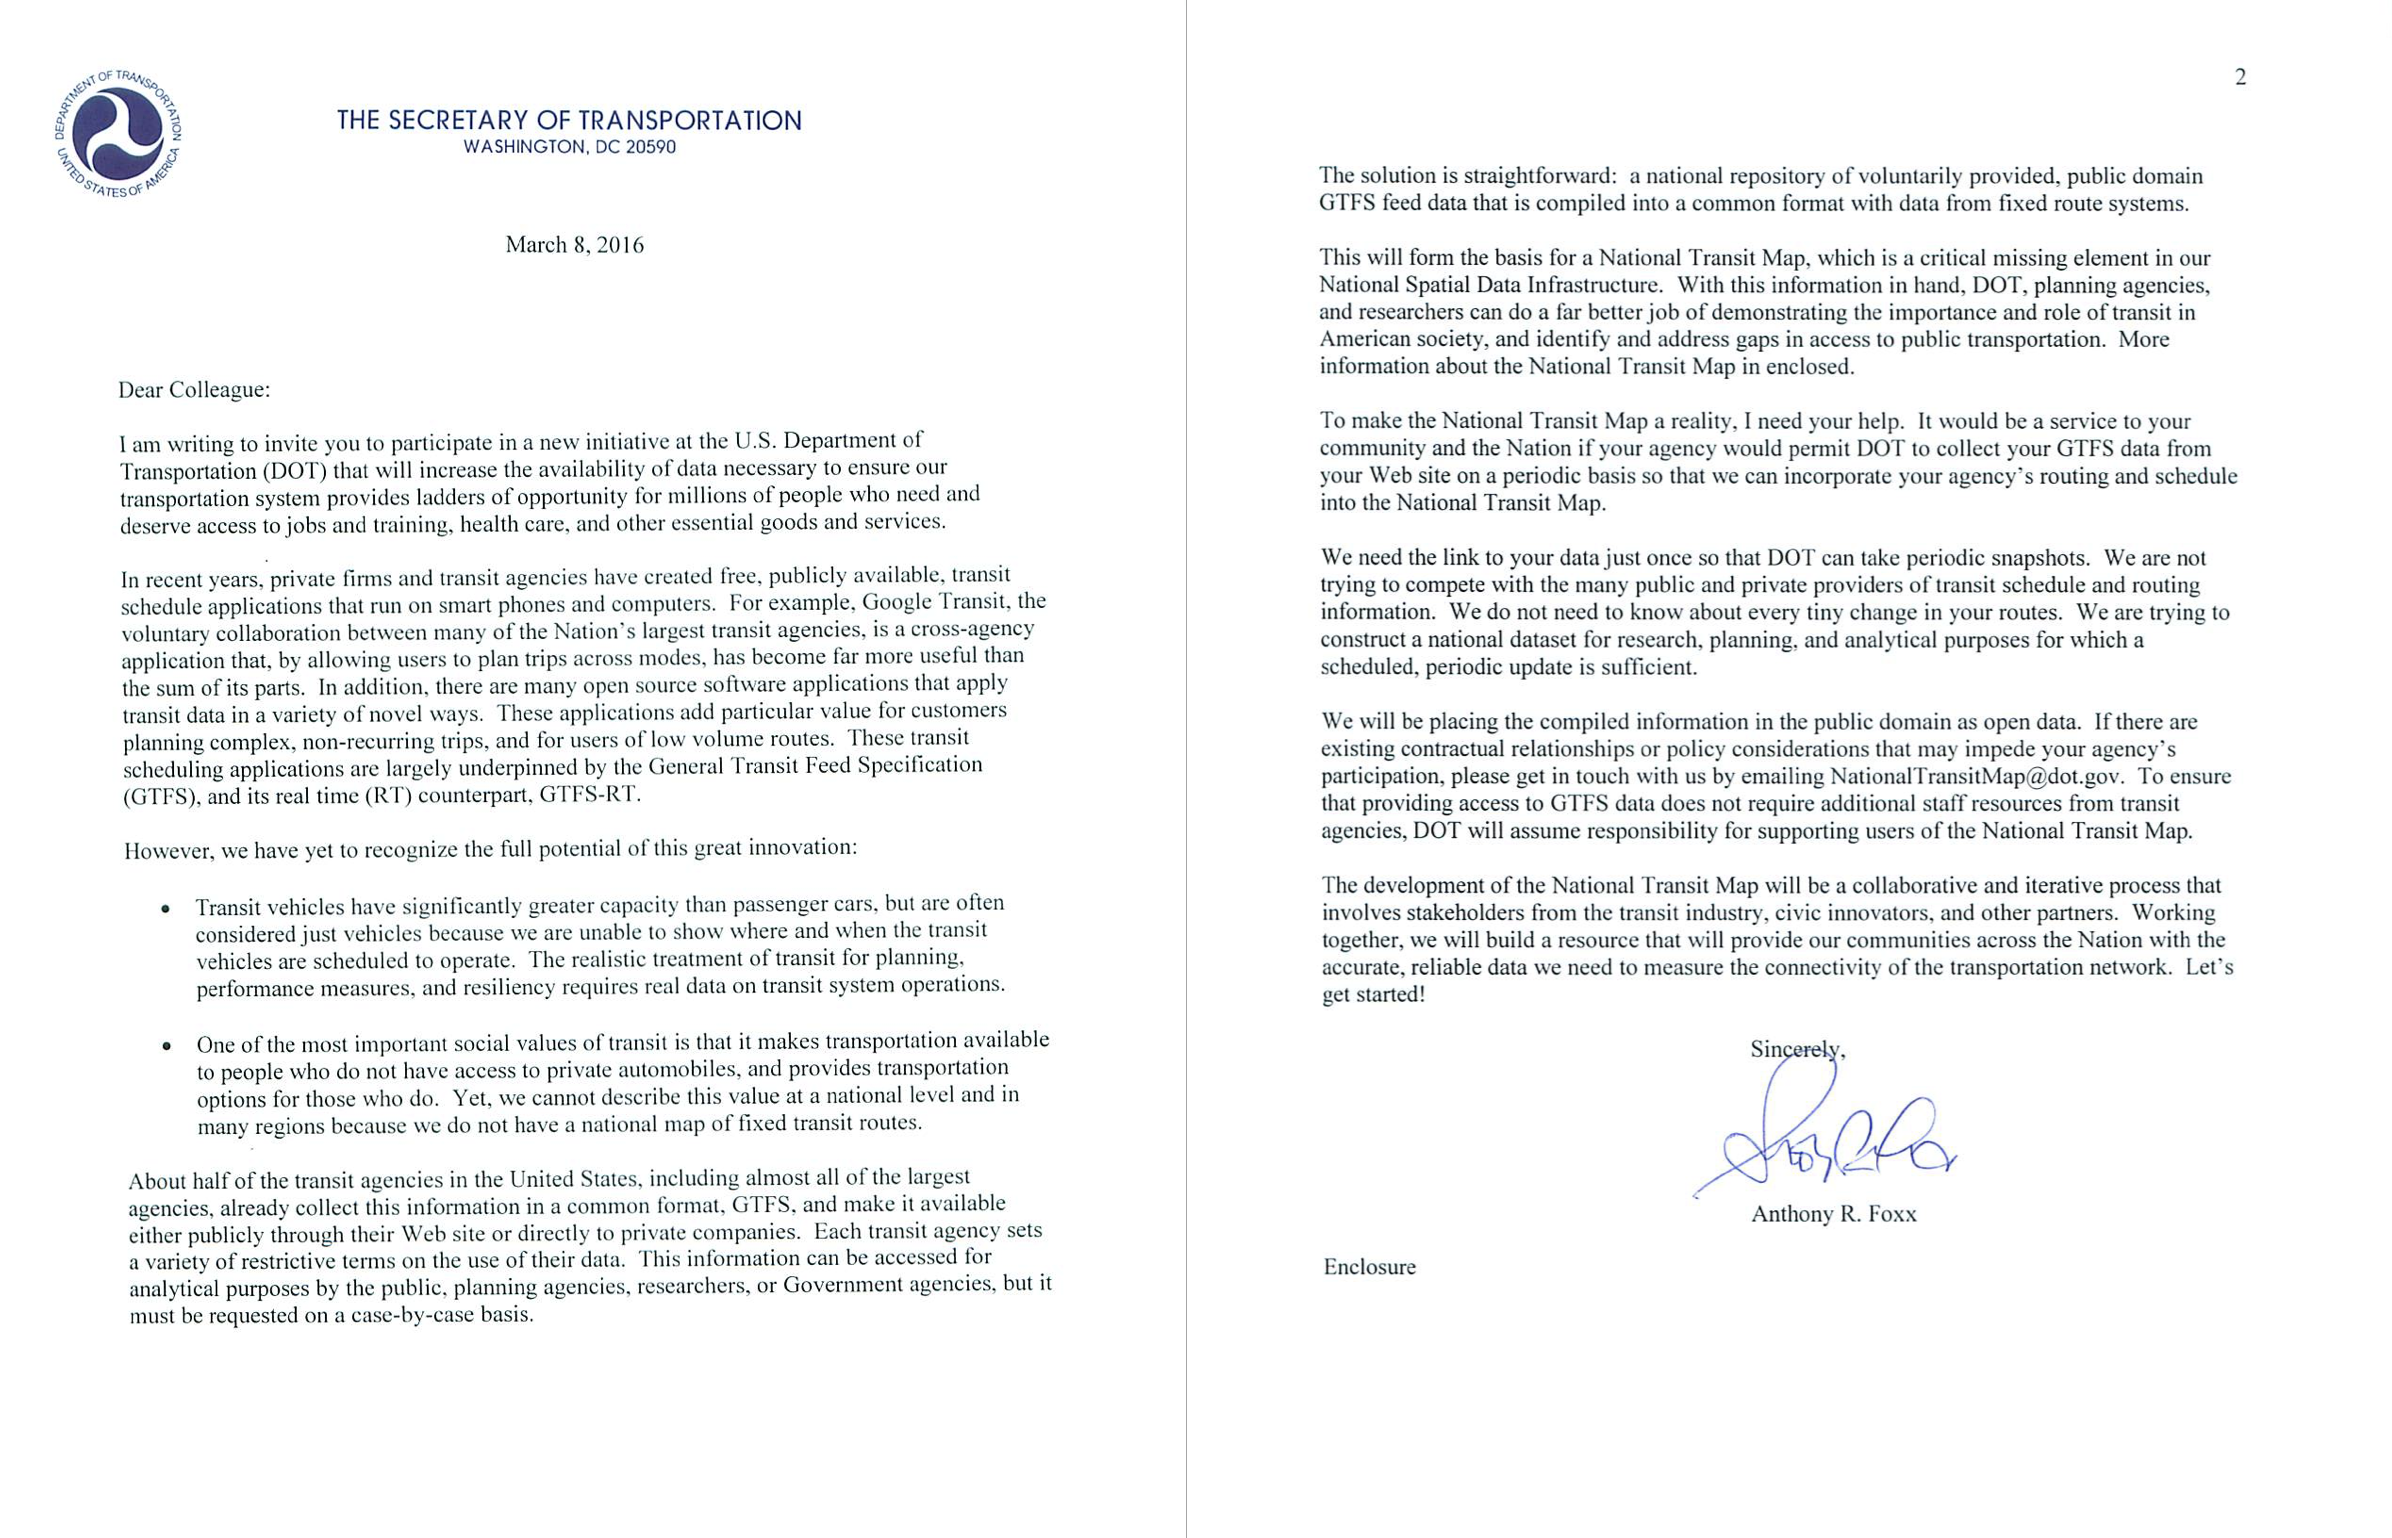 two-page letter written on US Department of Transportation letterhead addressed 'dear colleague'